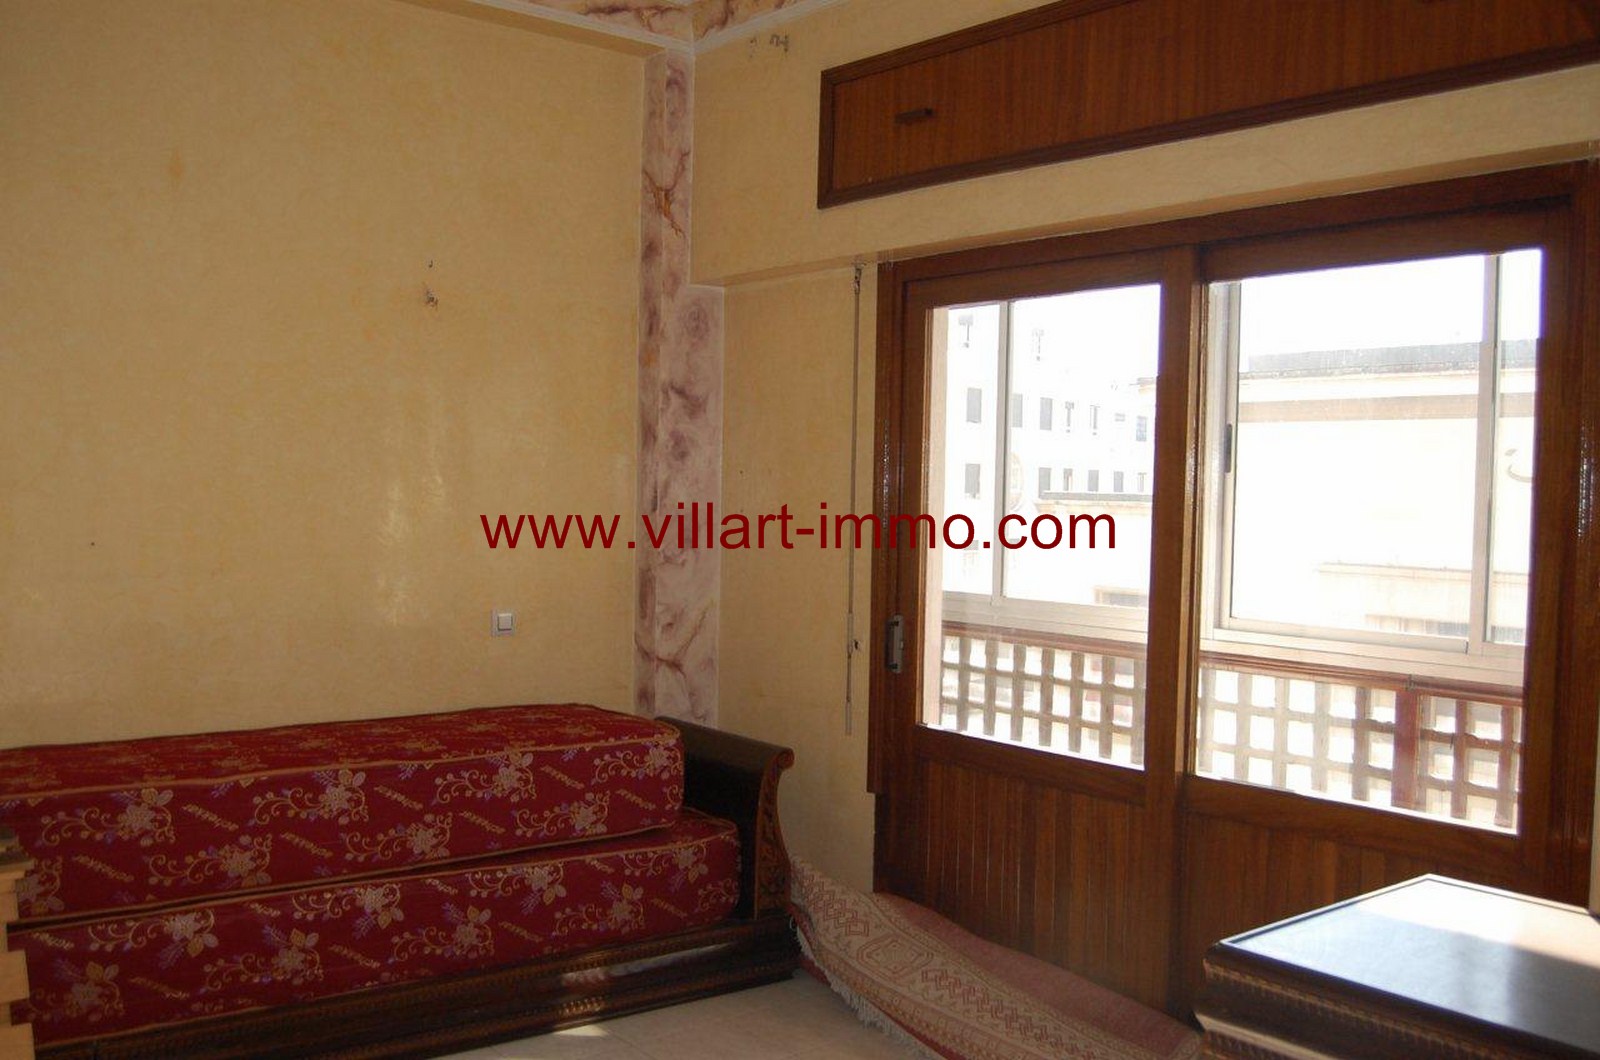 2-vente-appartement-Tanger-centre ville-salon 2-VA365-Villart Immo